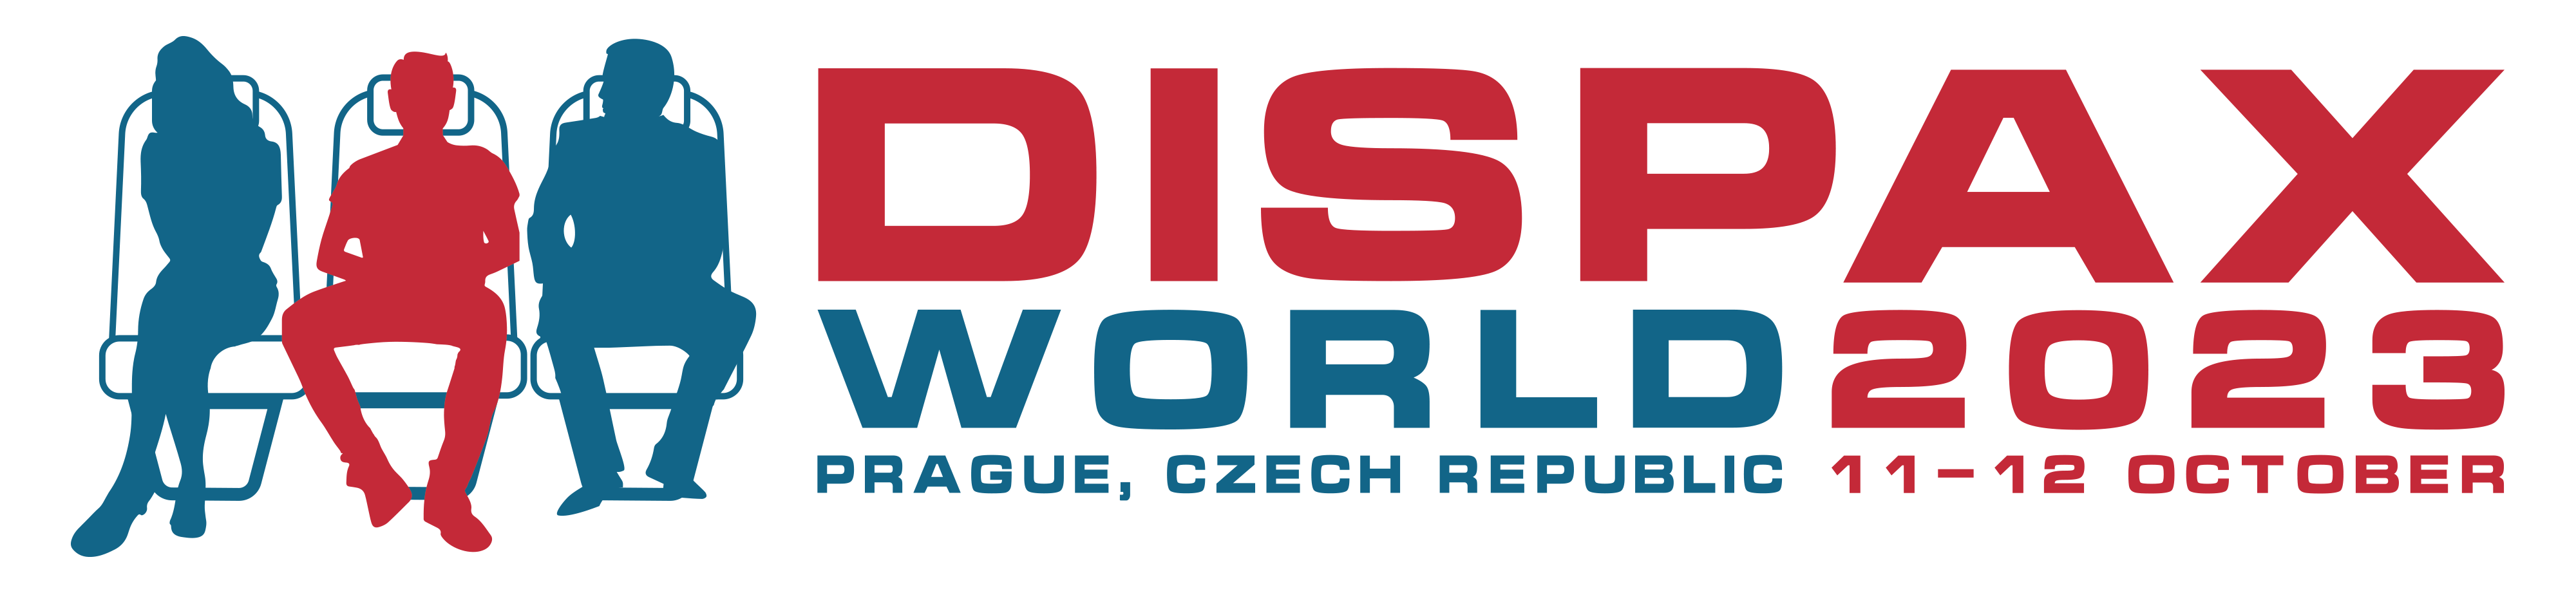 DISPAX World 2023